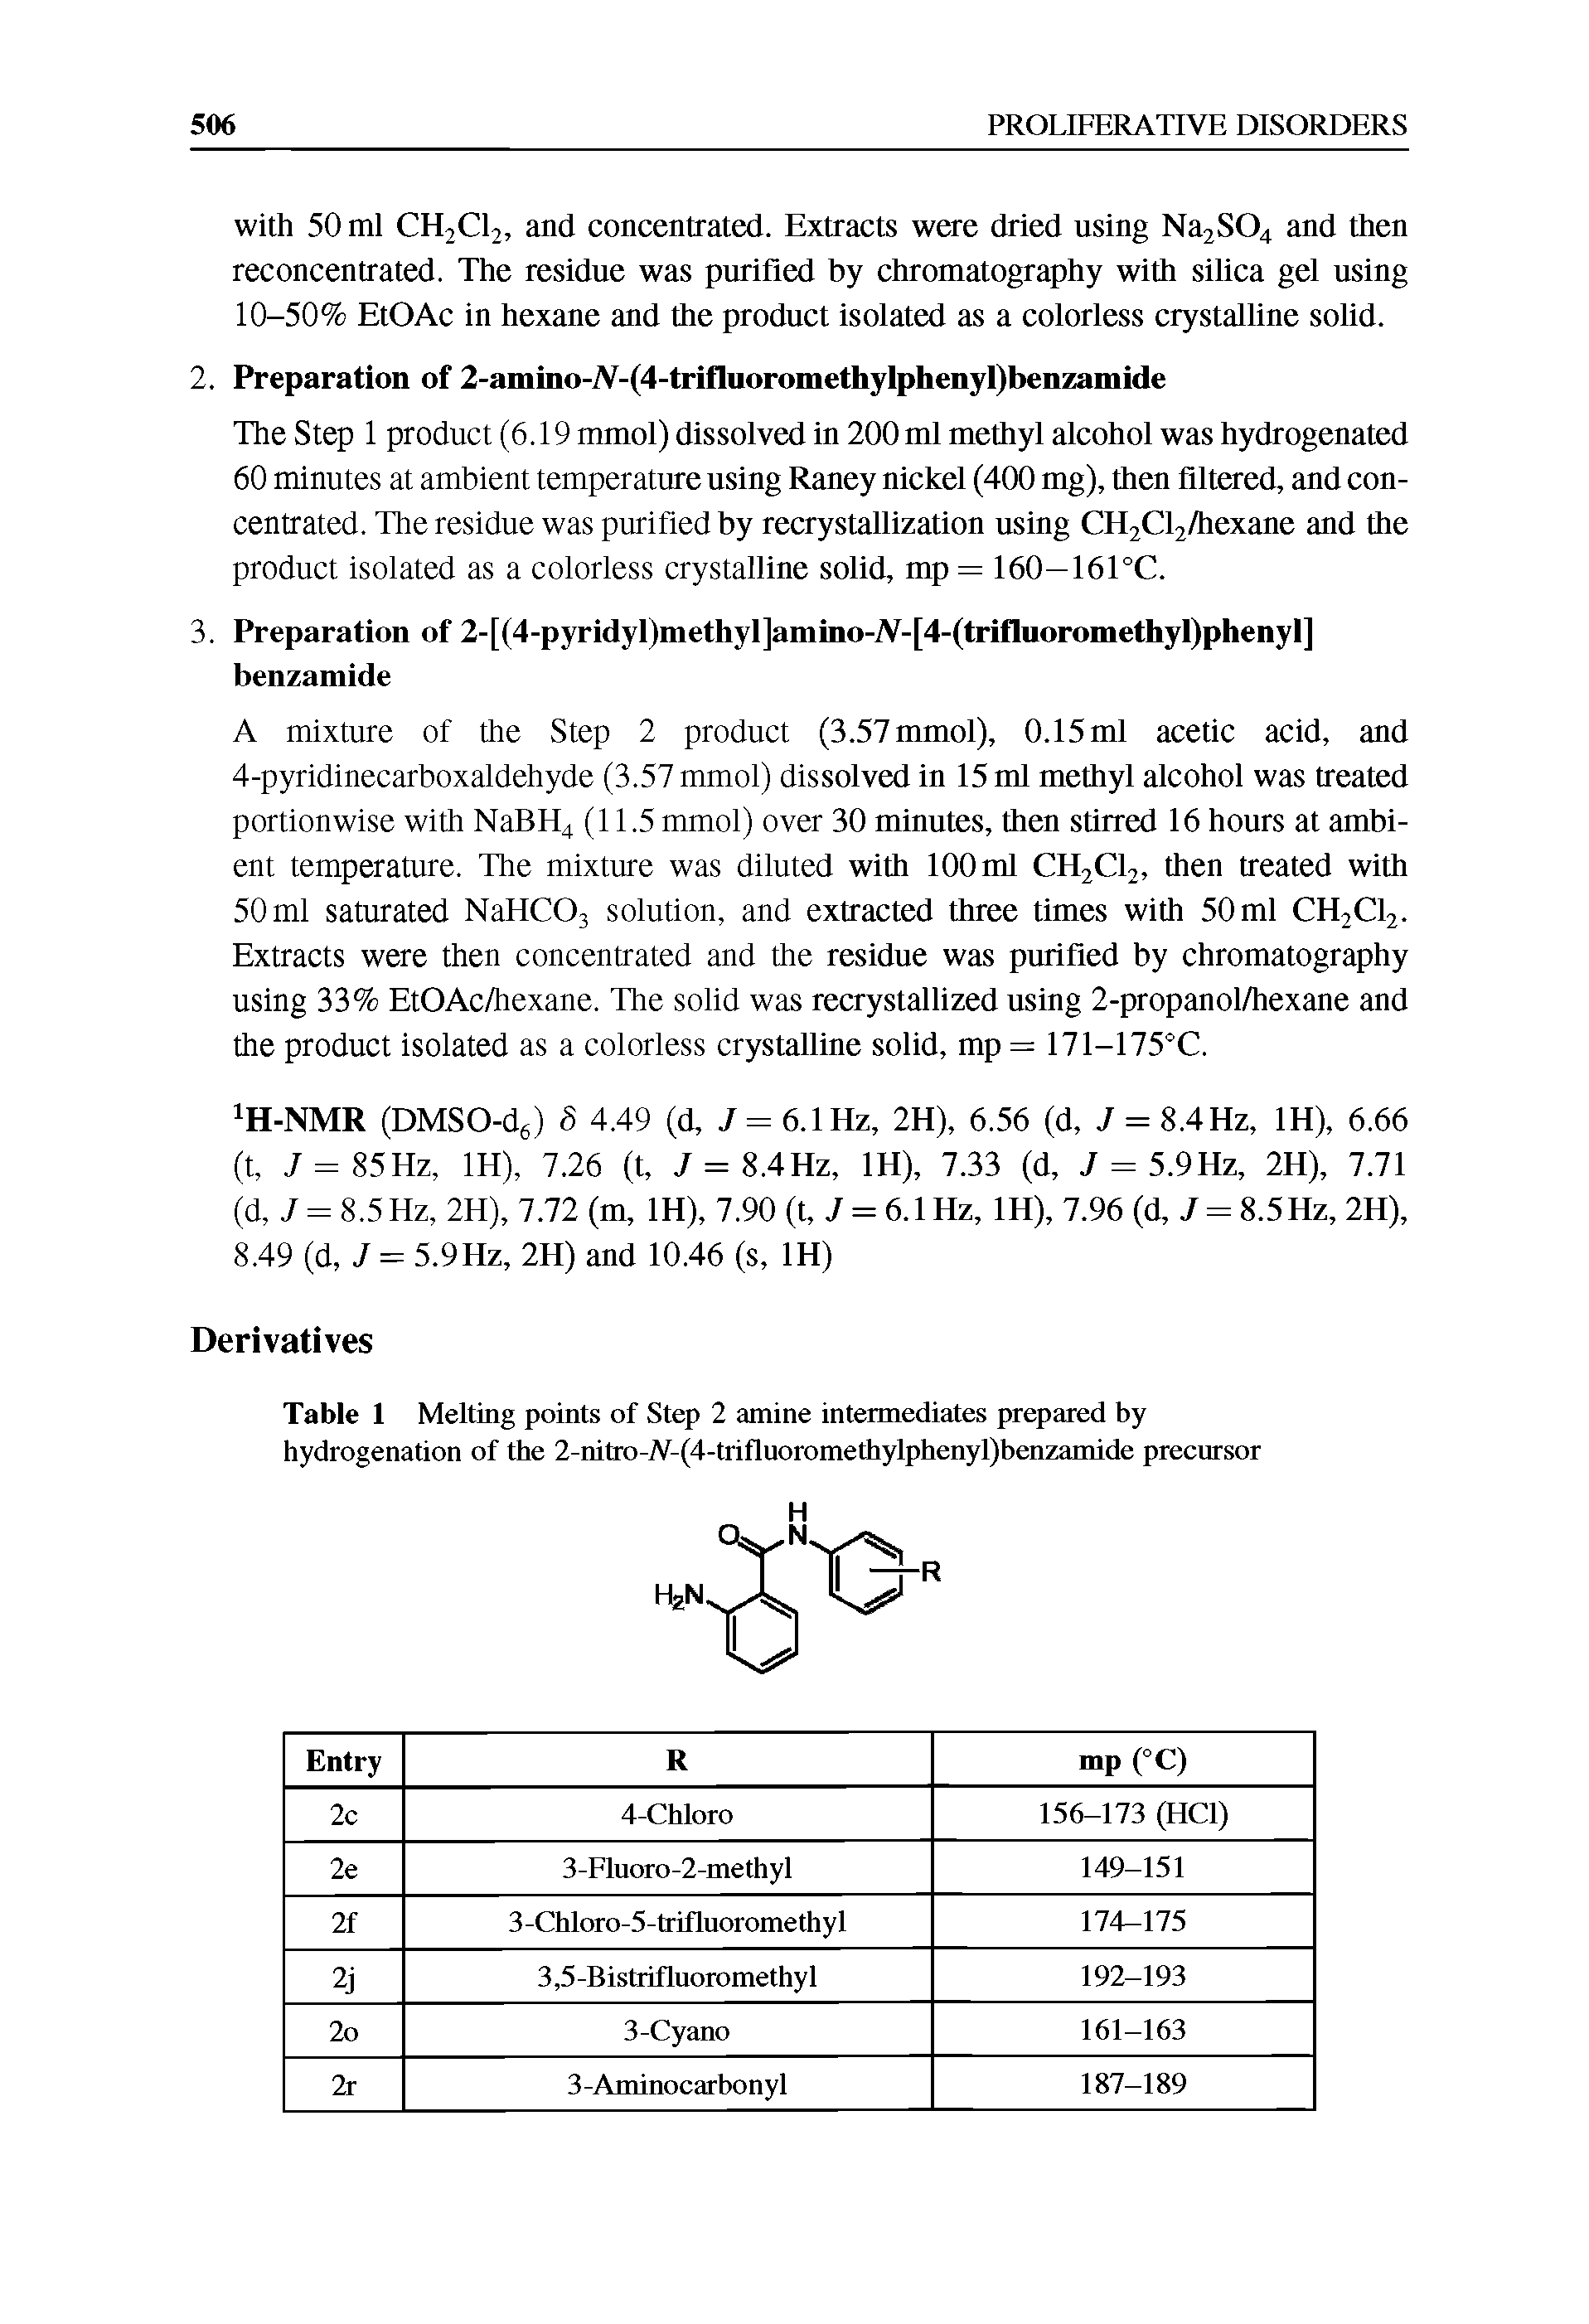 Table 1 Melting points of Step 2 amine intermediates prepared by hydrogenation of the 2-nilro-V-(4-tnfluoromethylphenyl)benzamide precursor...